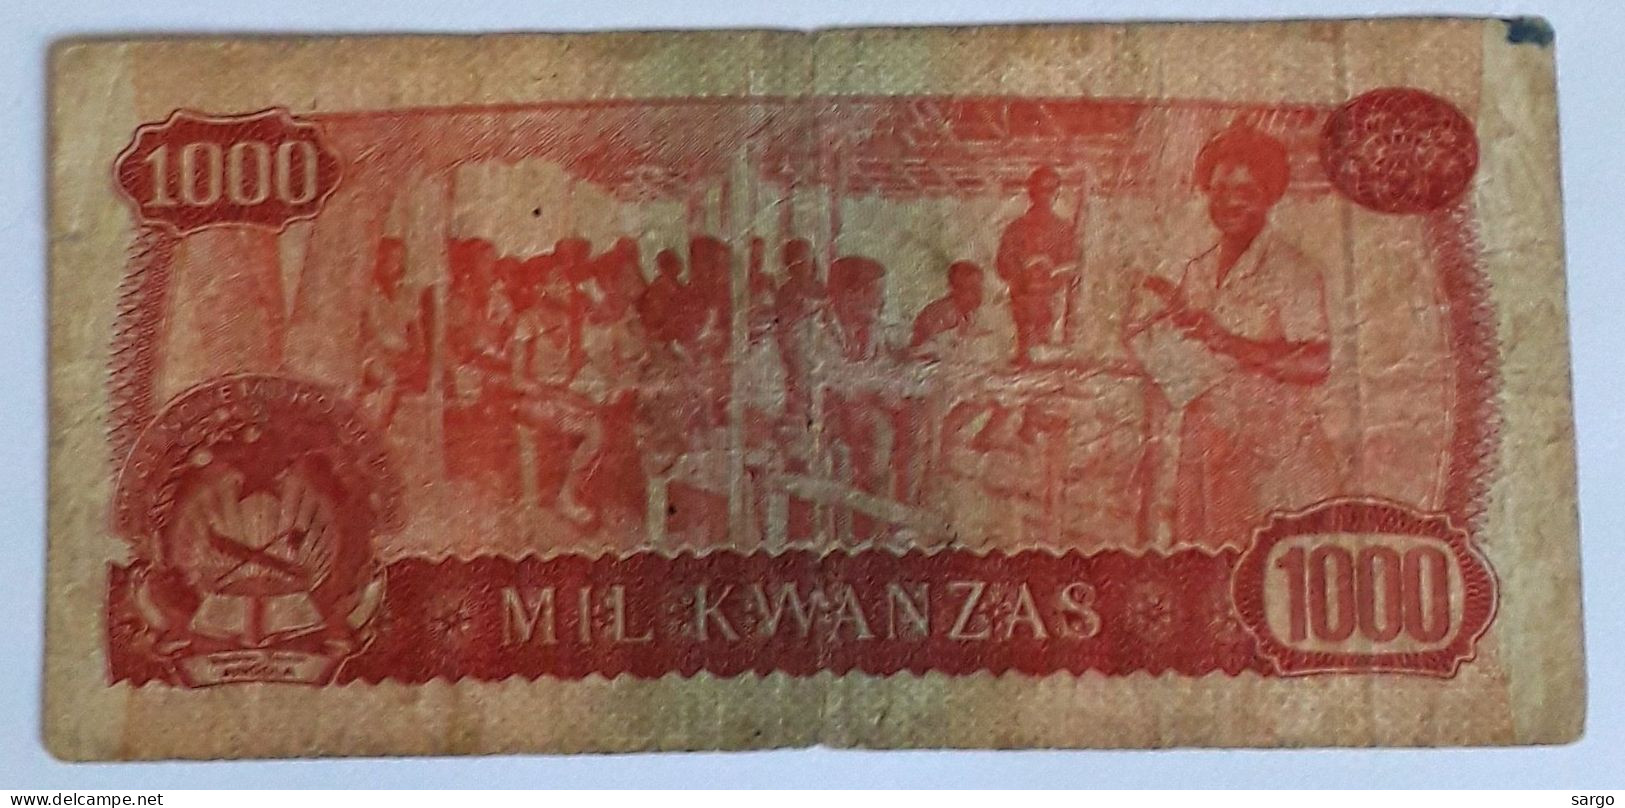 ANGOLA - 1000 KWANZAS  - 1976 - CIRC - P 113 - BANKNOTES - PAPER MONEY - CARTAMONETA - - Angola